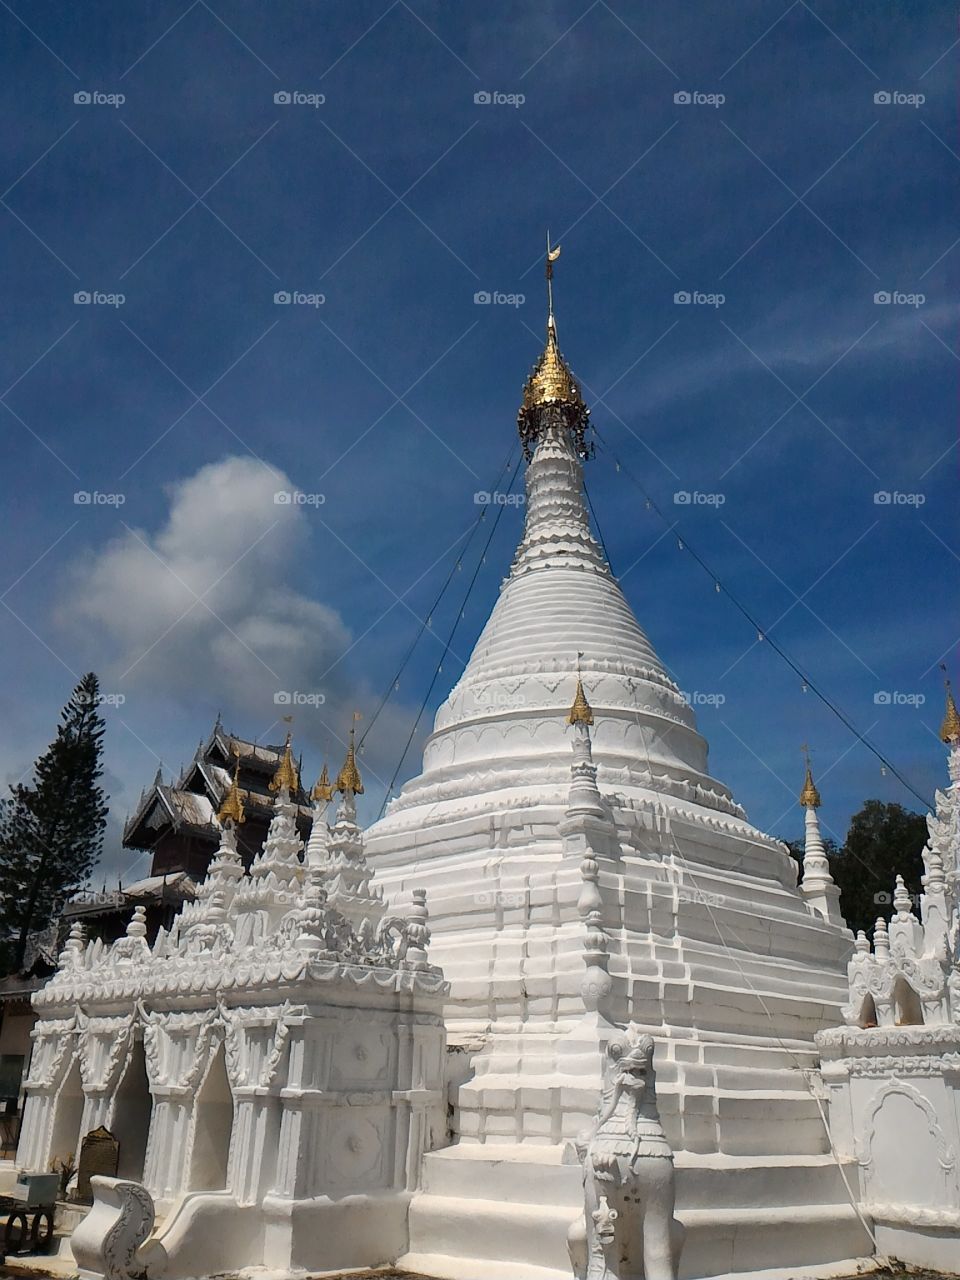 Architecture, Religion, Temple, Travel, Buddha